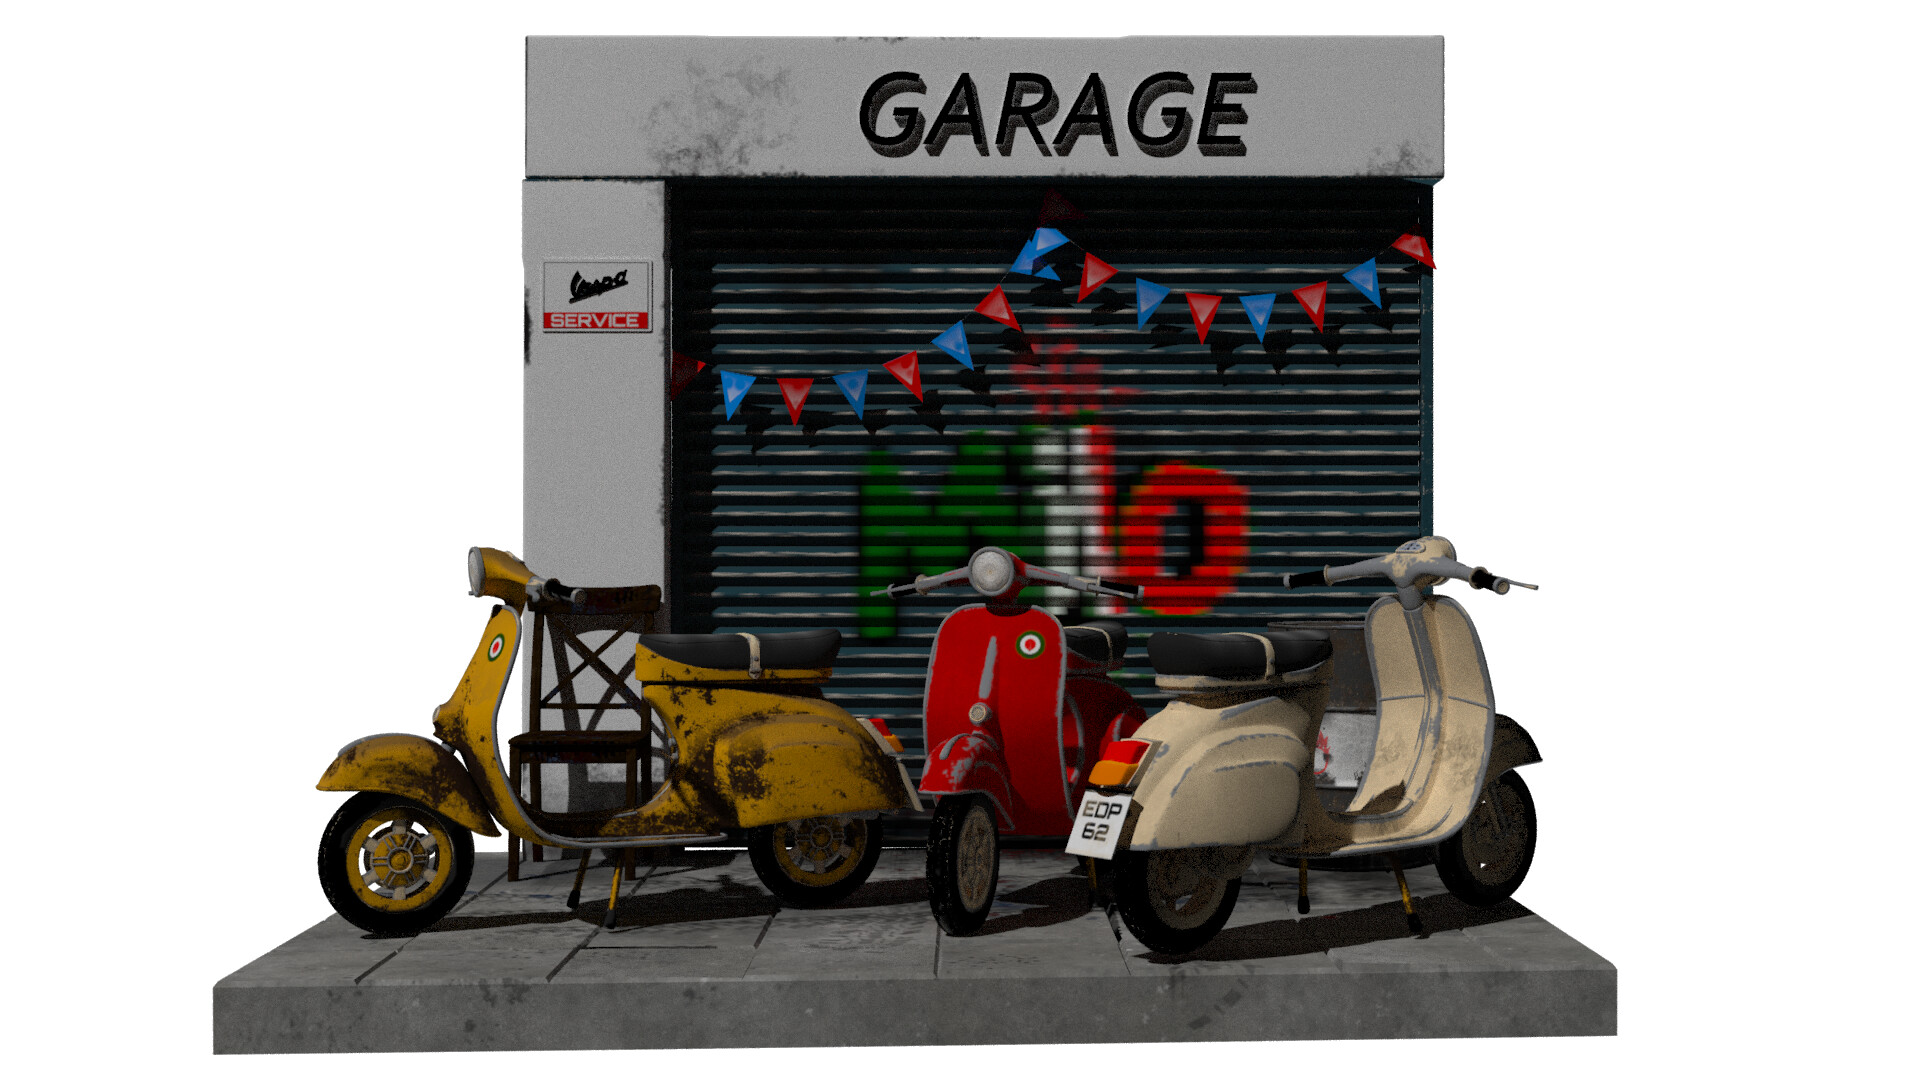 Tapis environnemental Moto VESPA serie4 pour garage, atelier